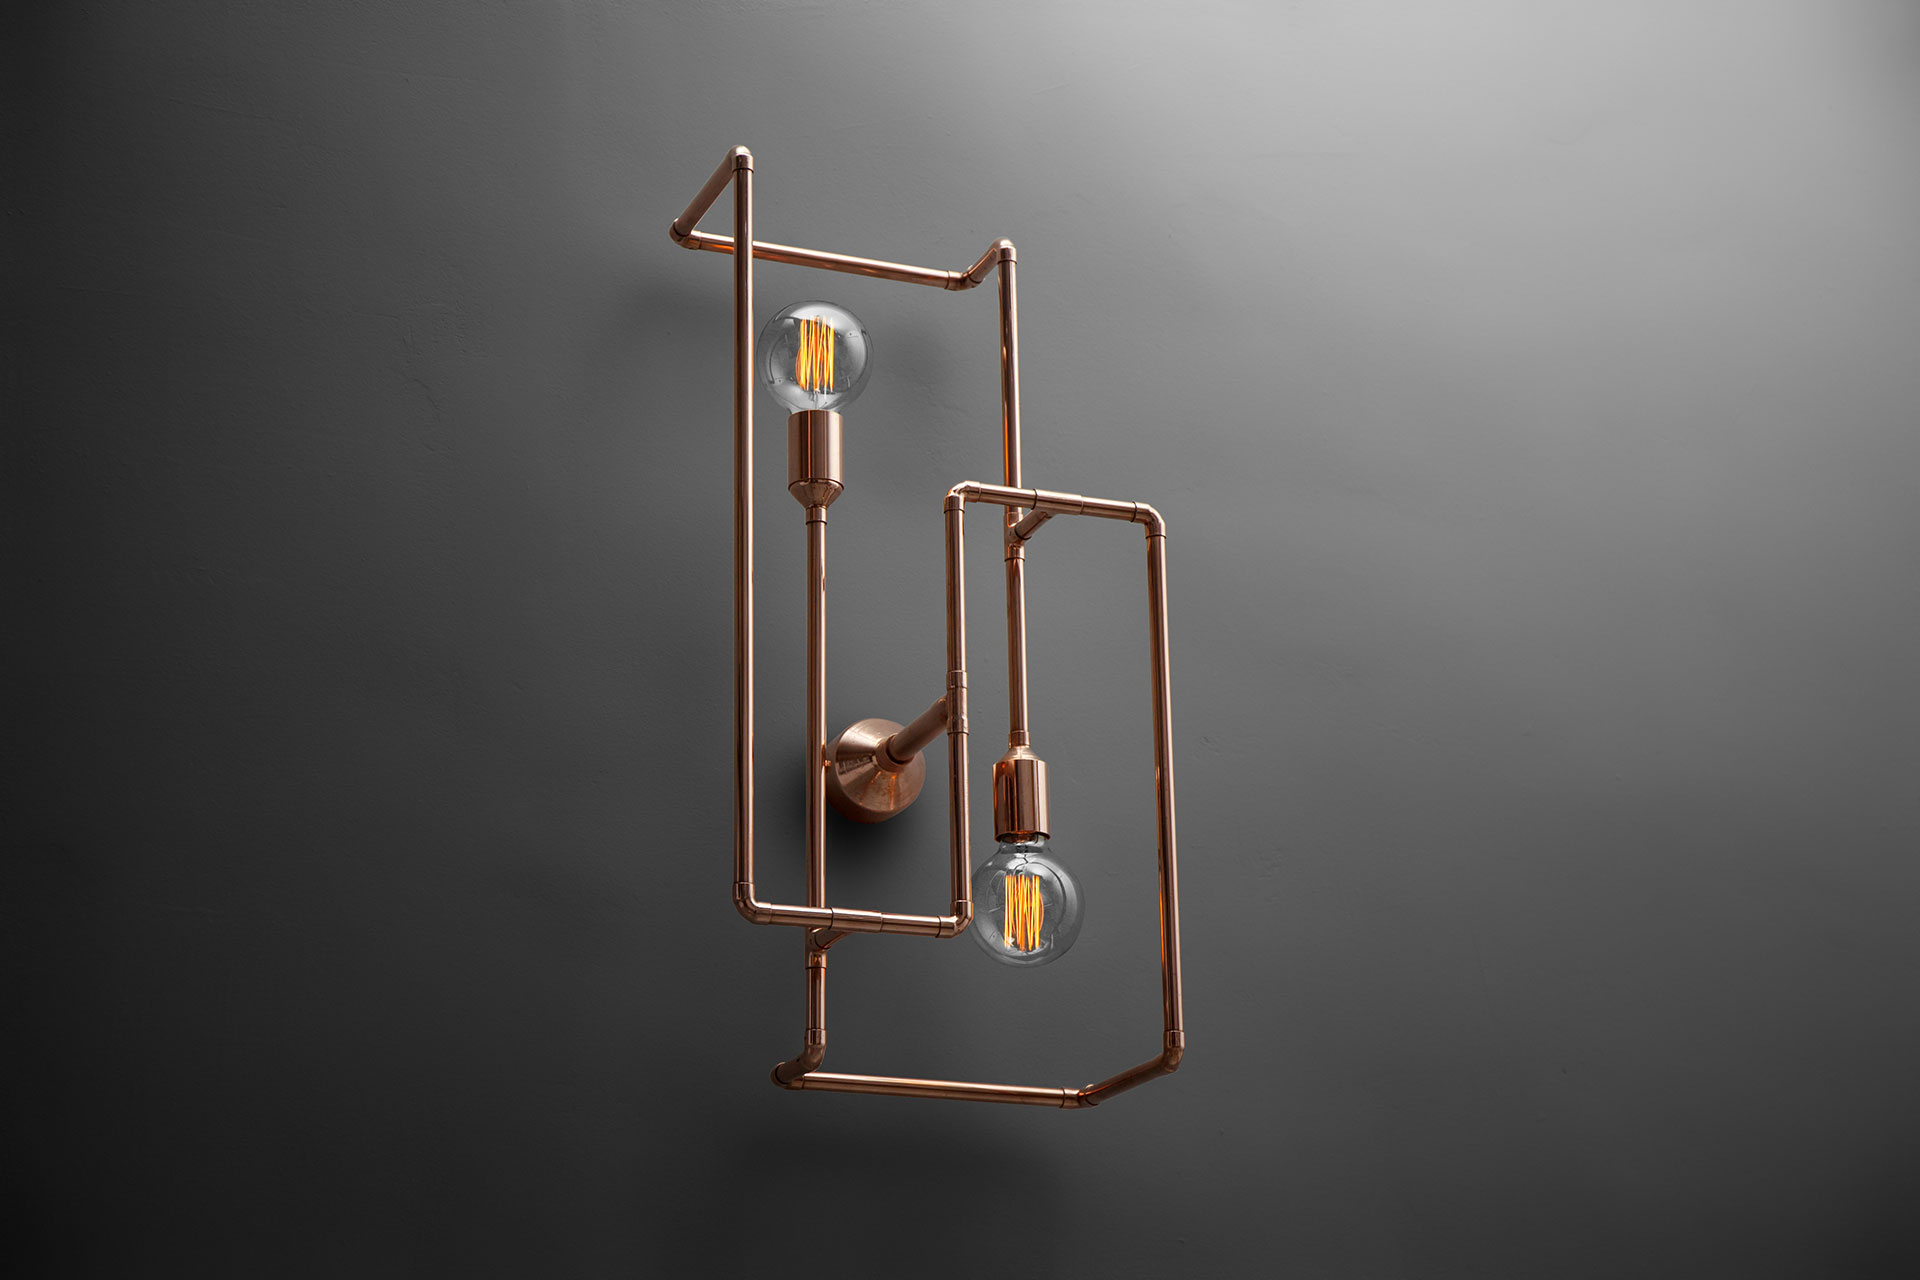 Large industrial design 2 lights sconce in copper or brass